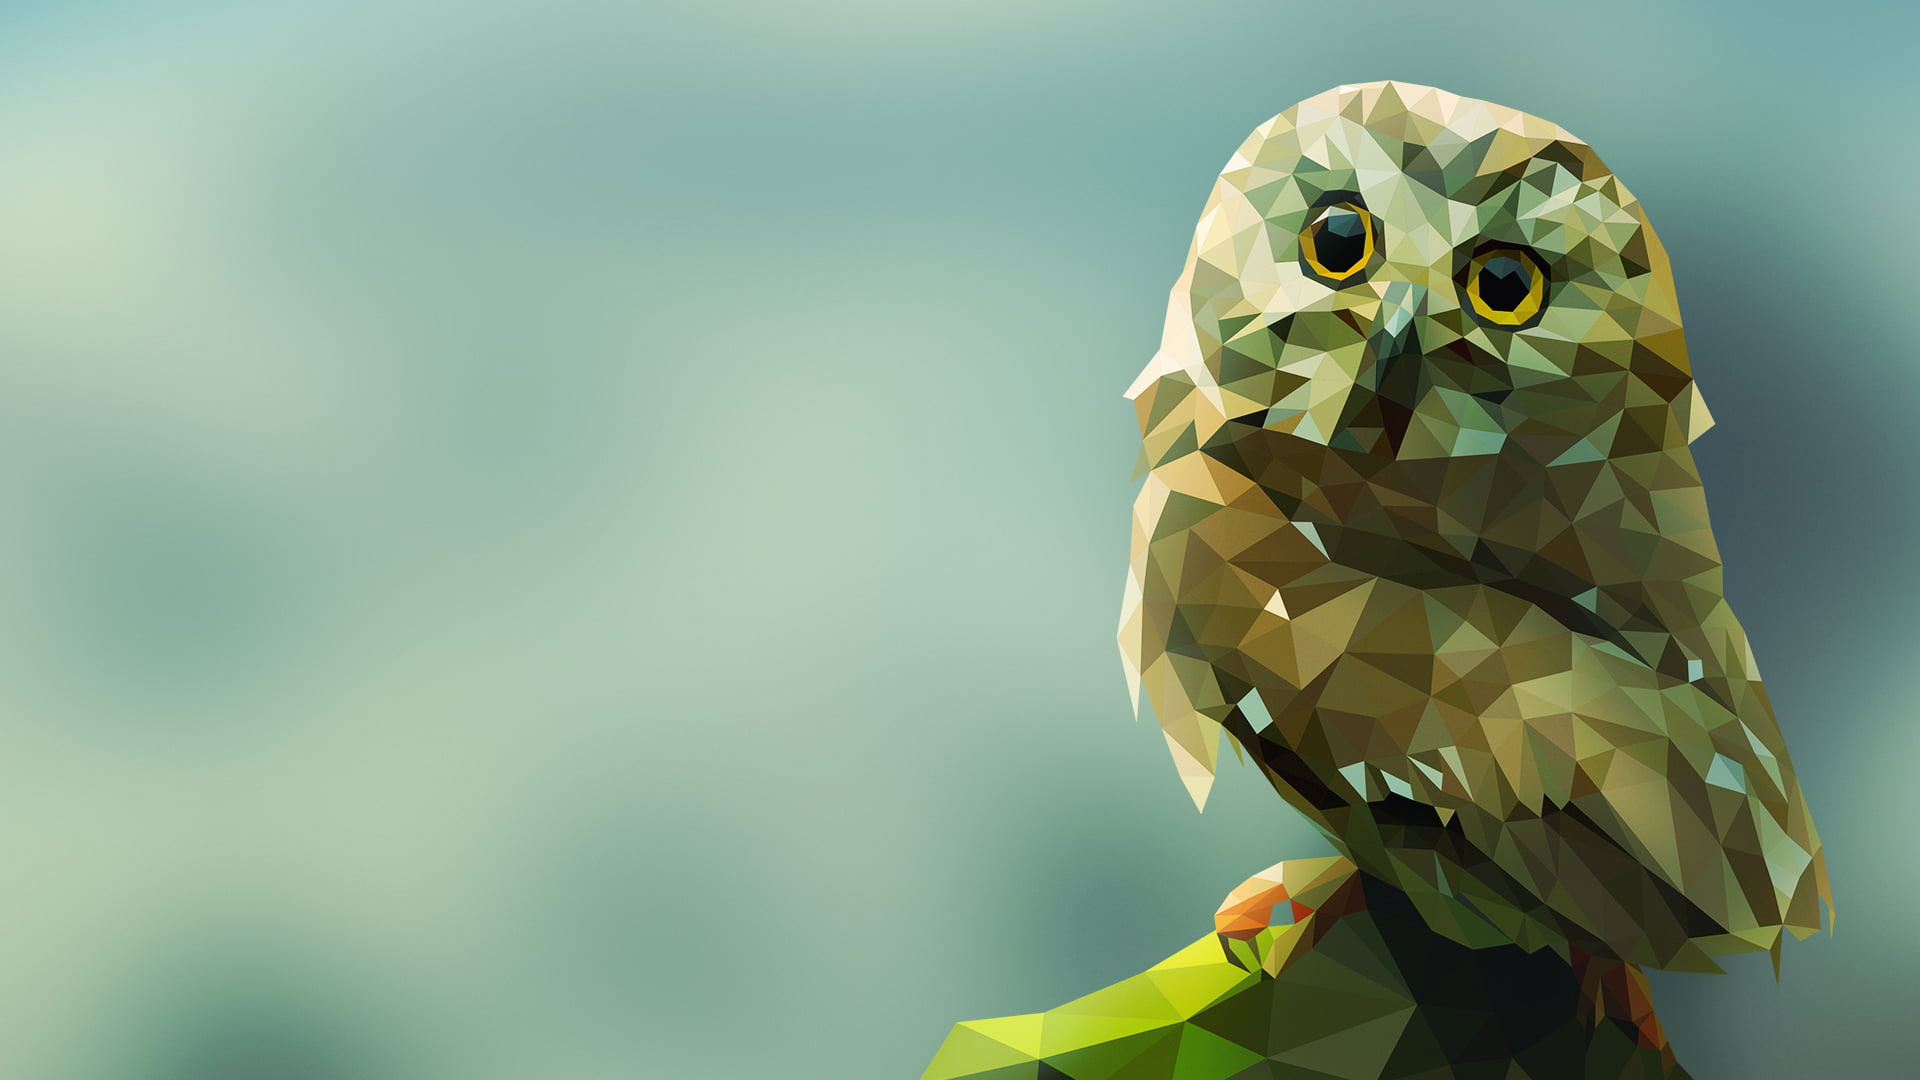 Brown owl illustration wallpaper, brown mosaic owl painting, animals, digital art